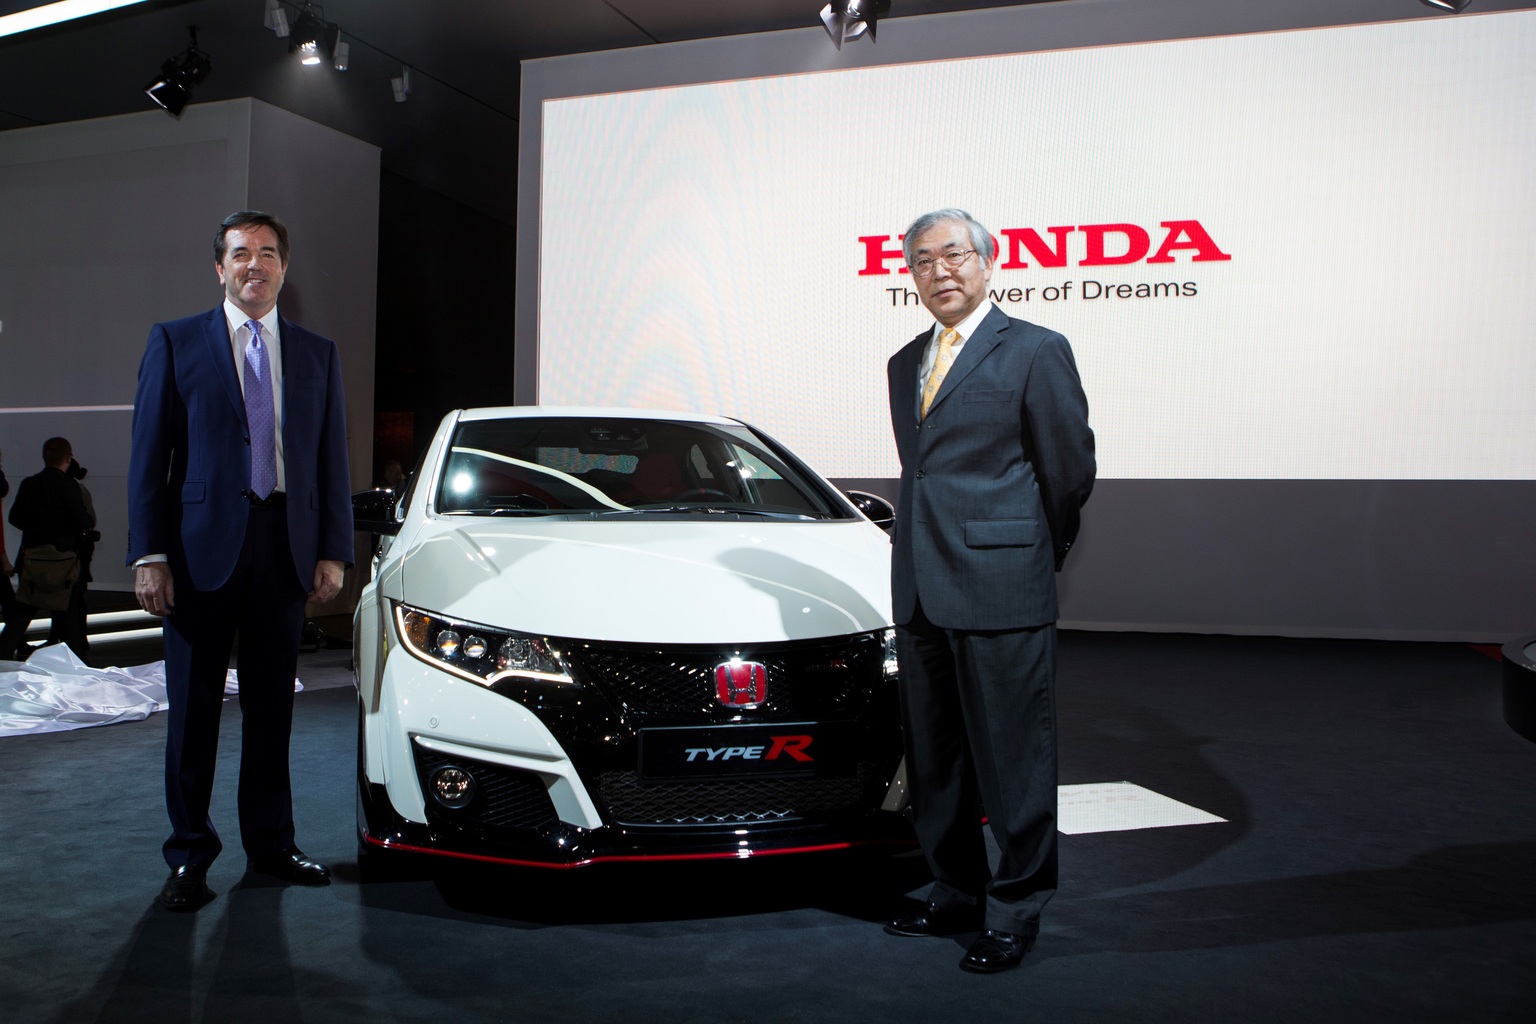 2015 Honda Civic Type-R Gallery